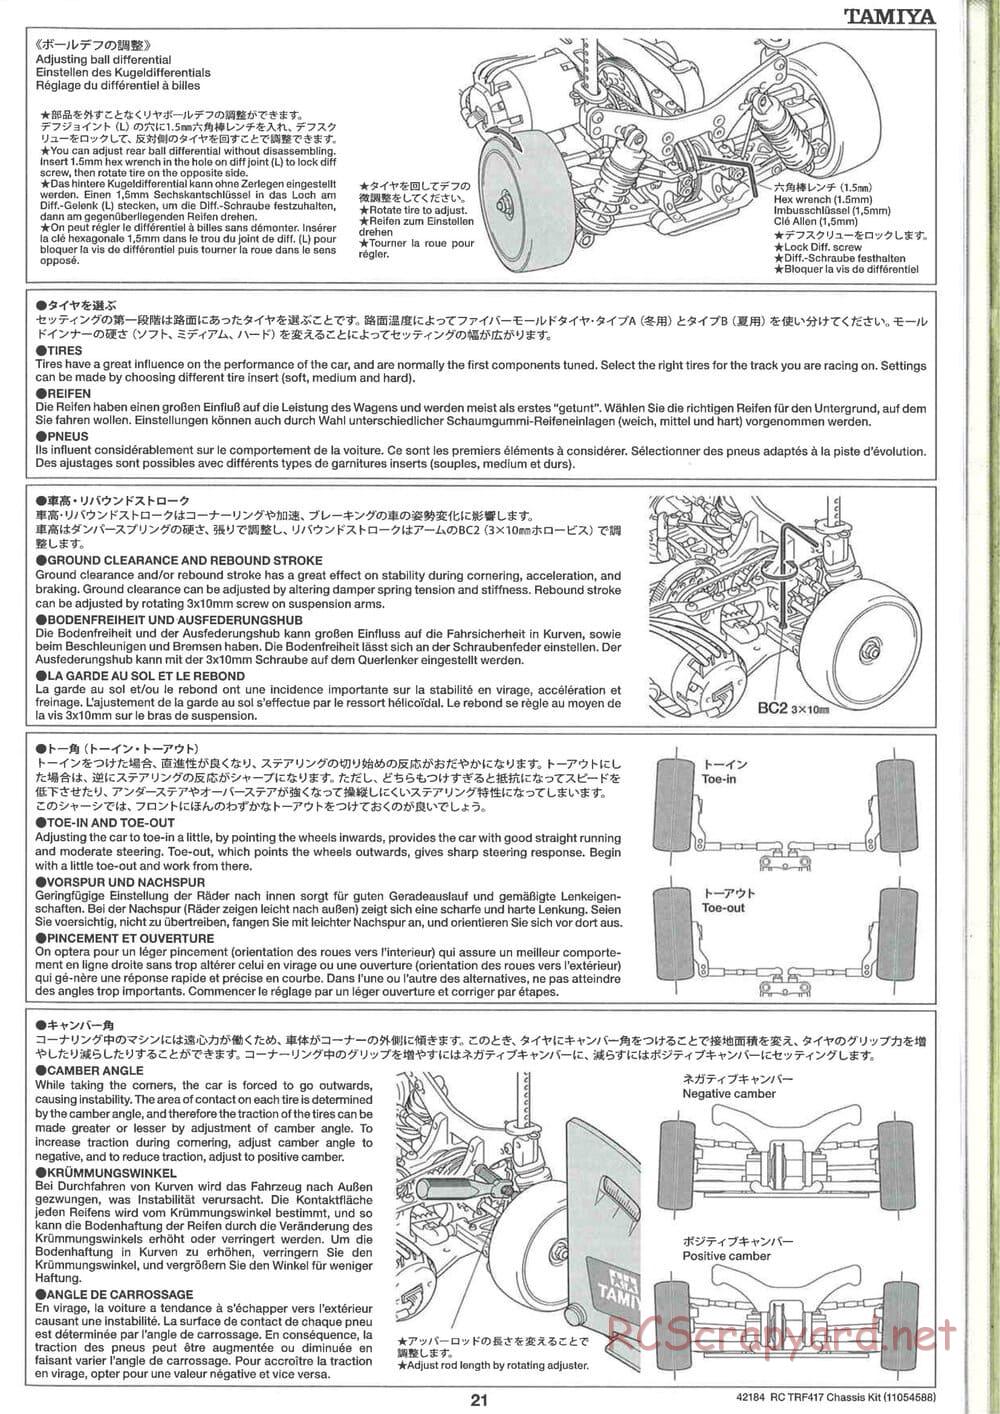 Tamiya - TRF417 Chassis - Manual - Page 21